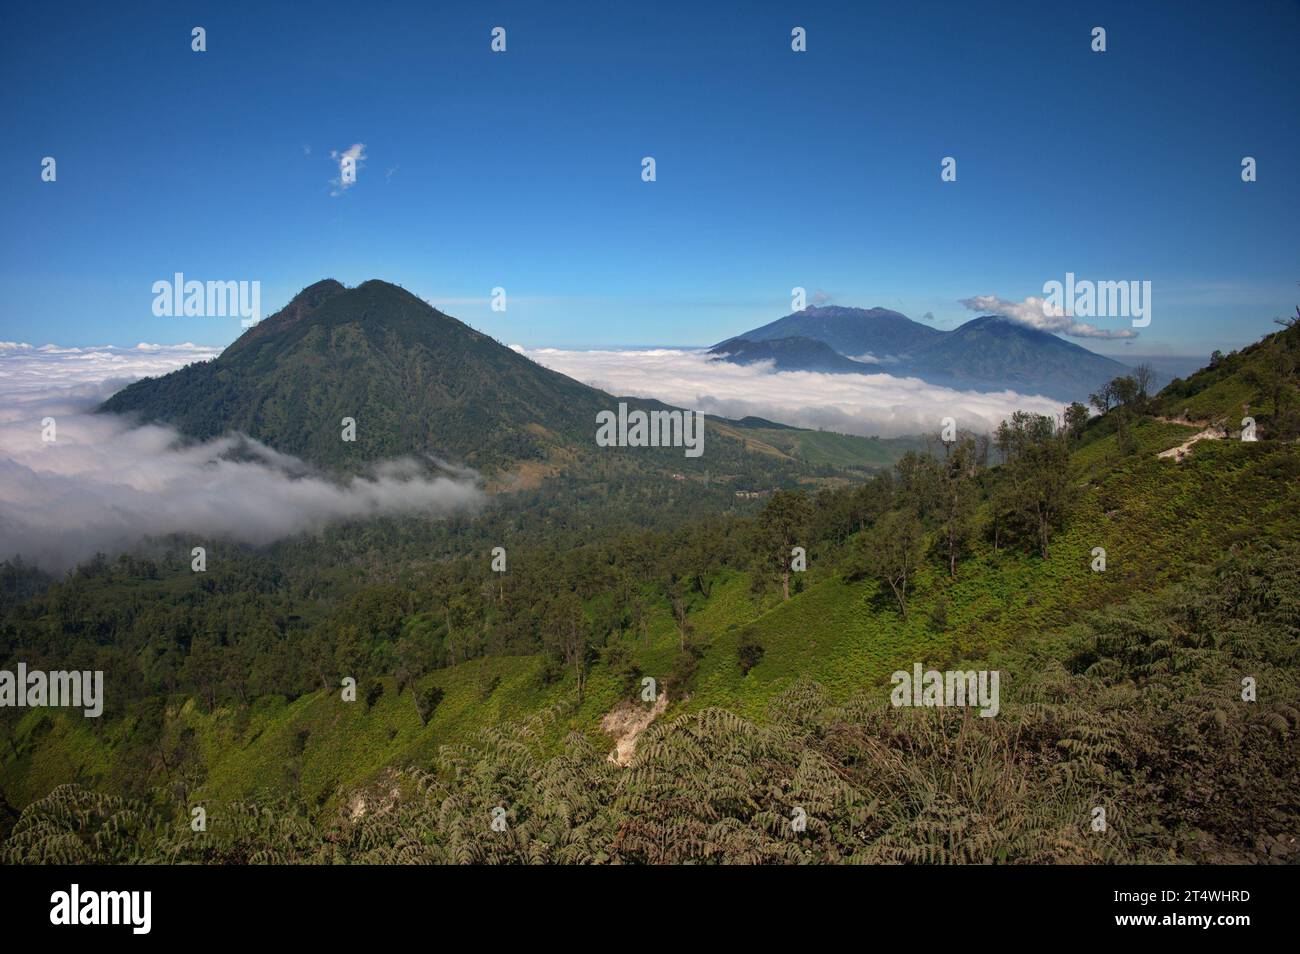 Scenic view from caldera of Ijen volcano, Indonesia Stock Photo